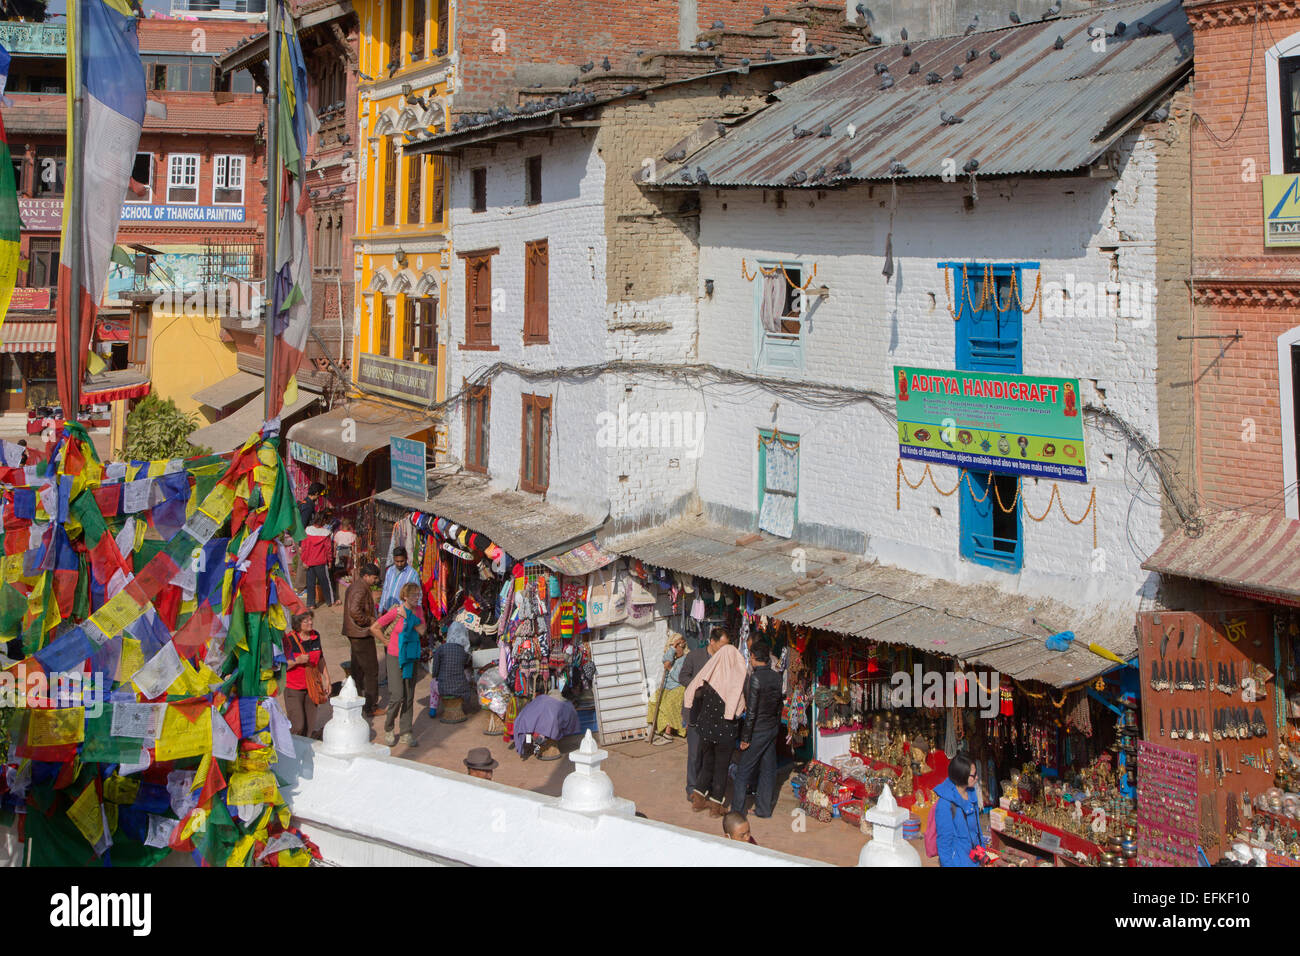 Shops around Bodnath the largest stupa in Nepal Durbar Square Kathmandu Stock Photo